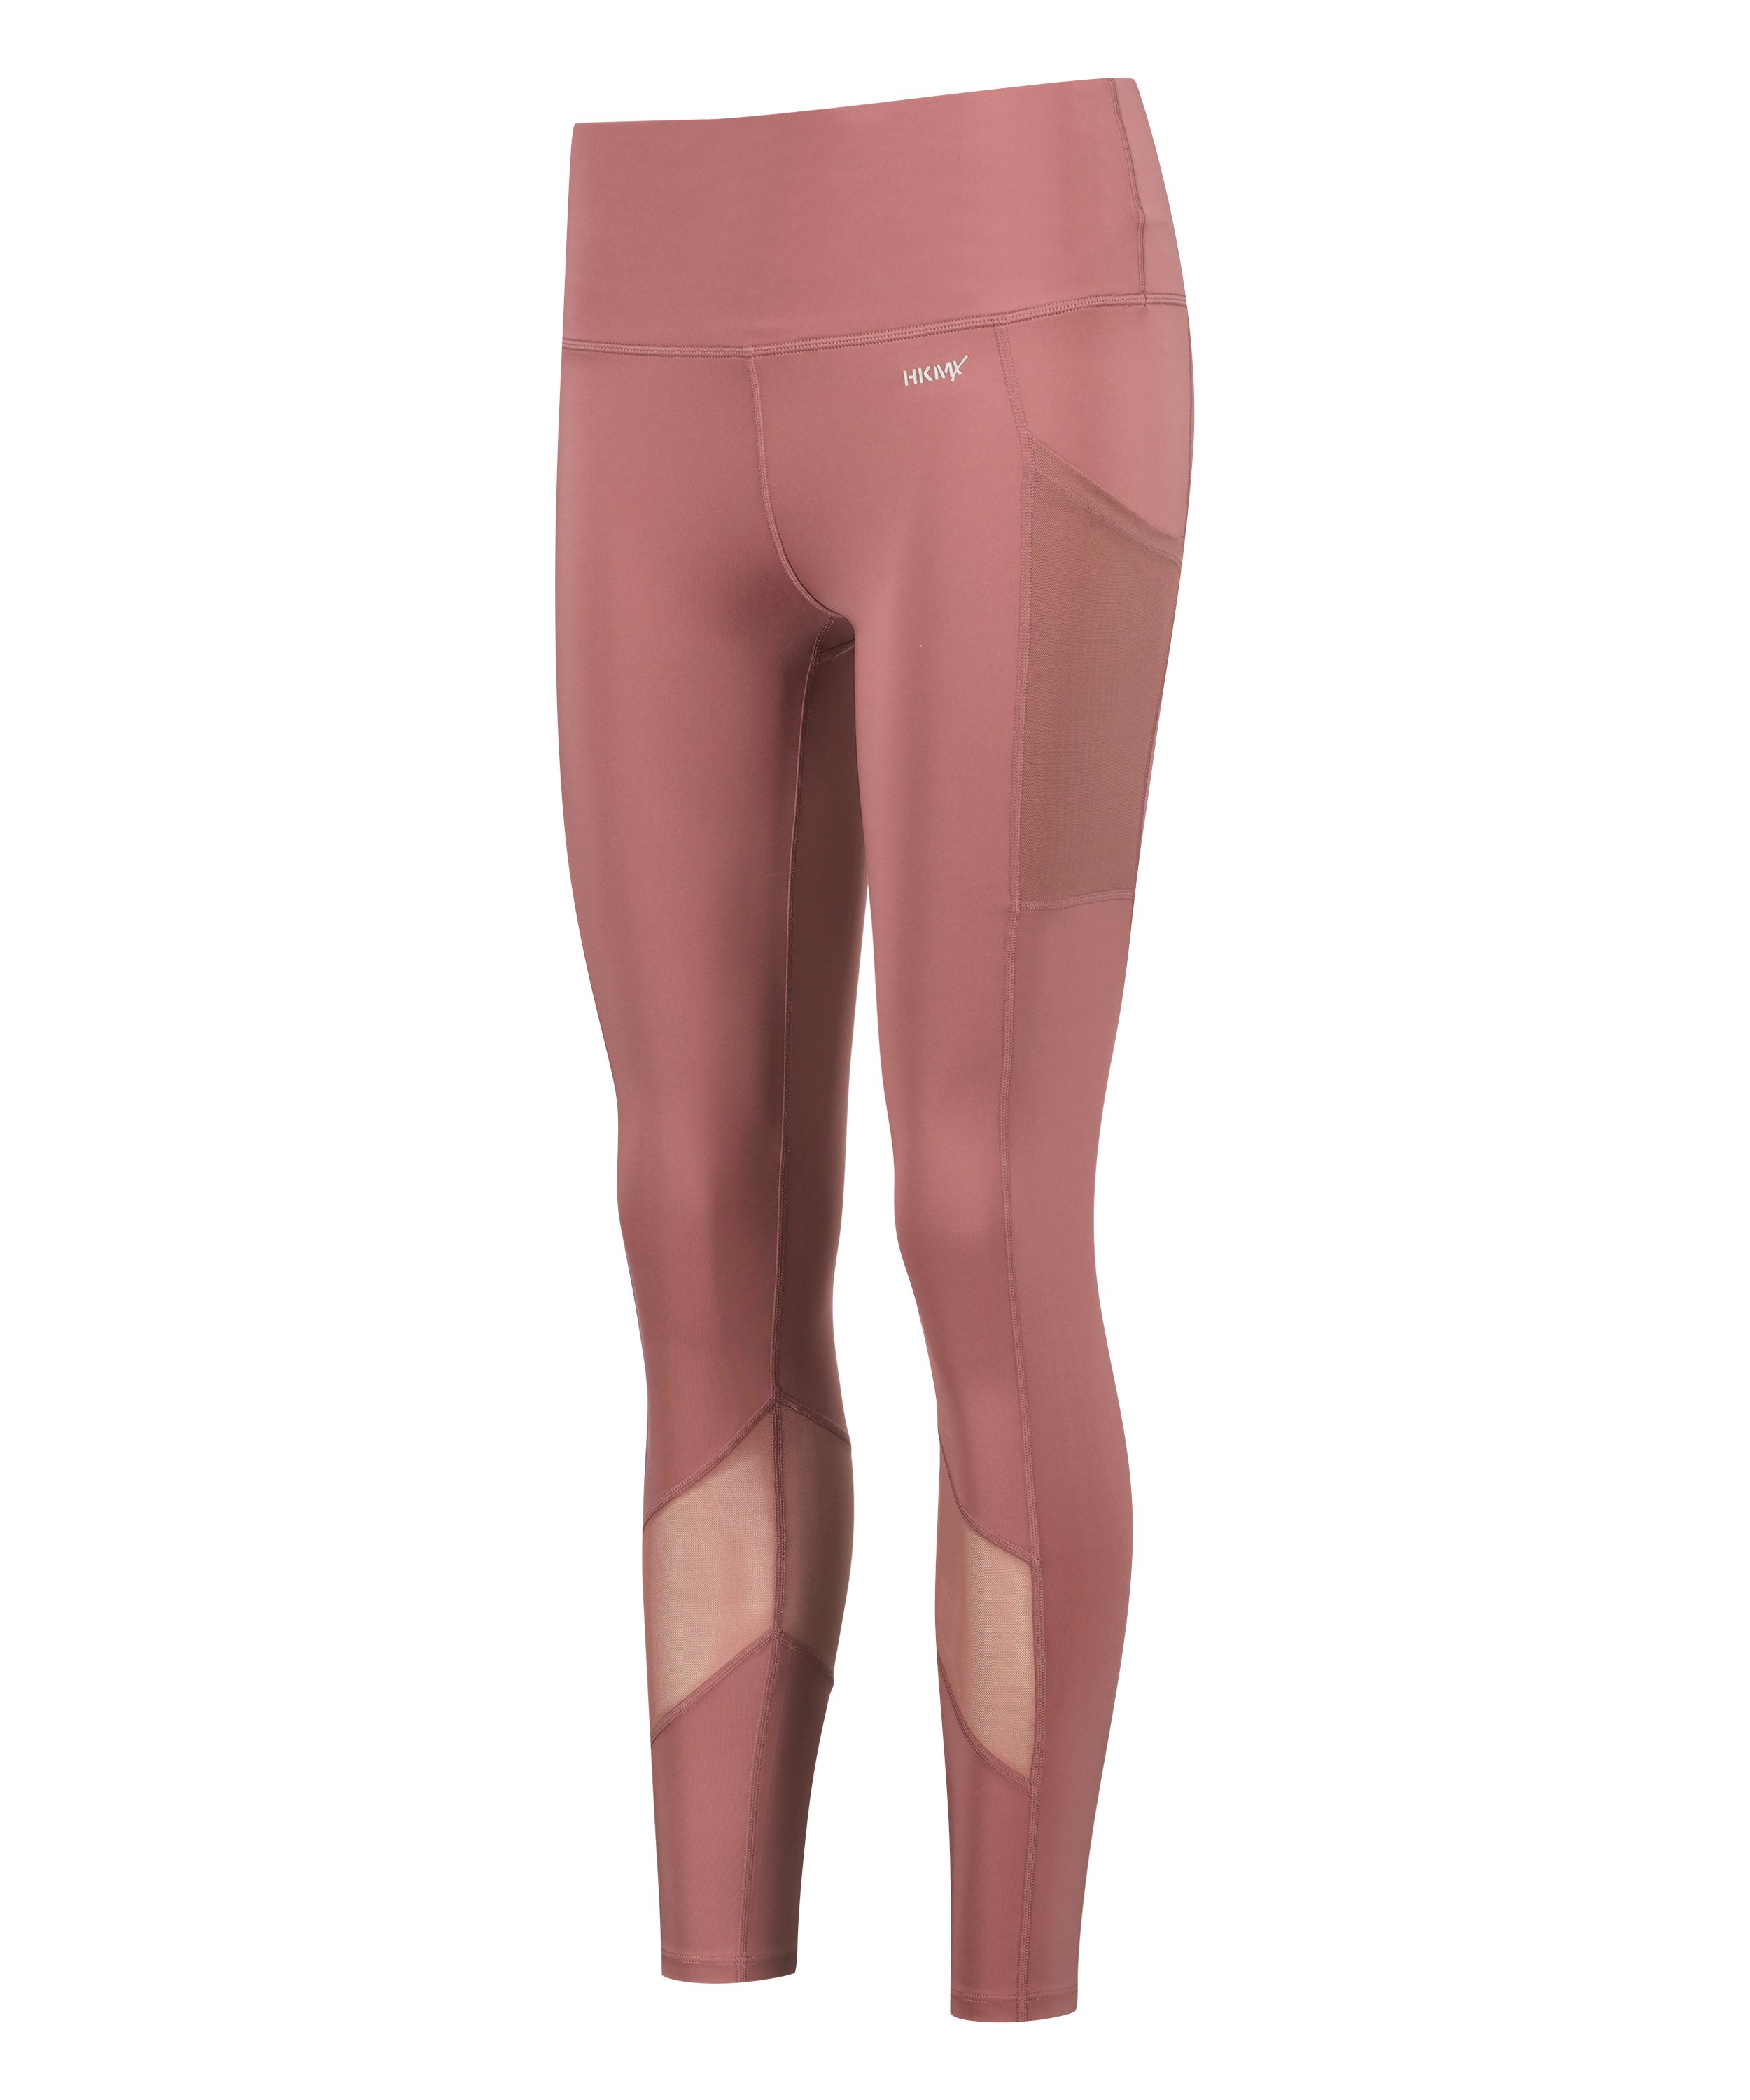 HKMX Oh My Squat-leggings med høj talje, pink, main